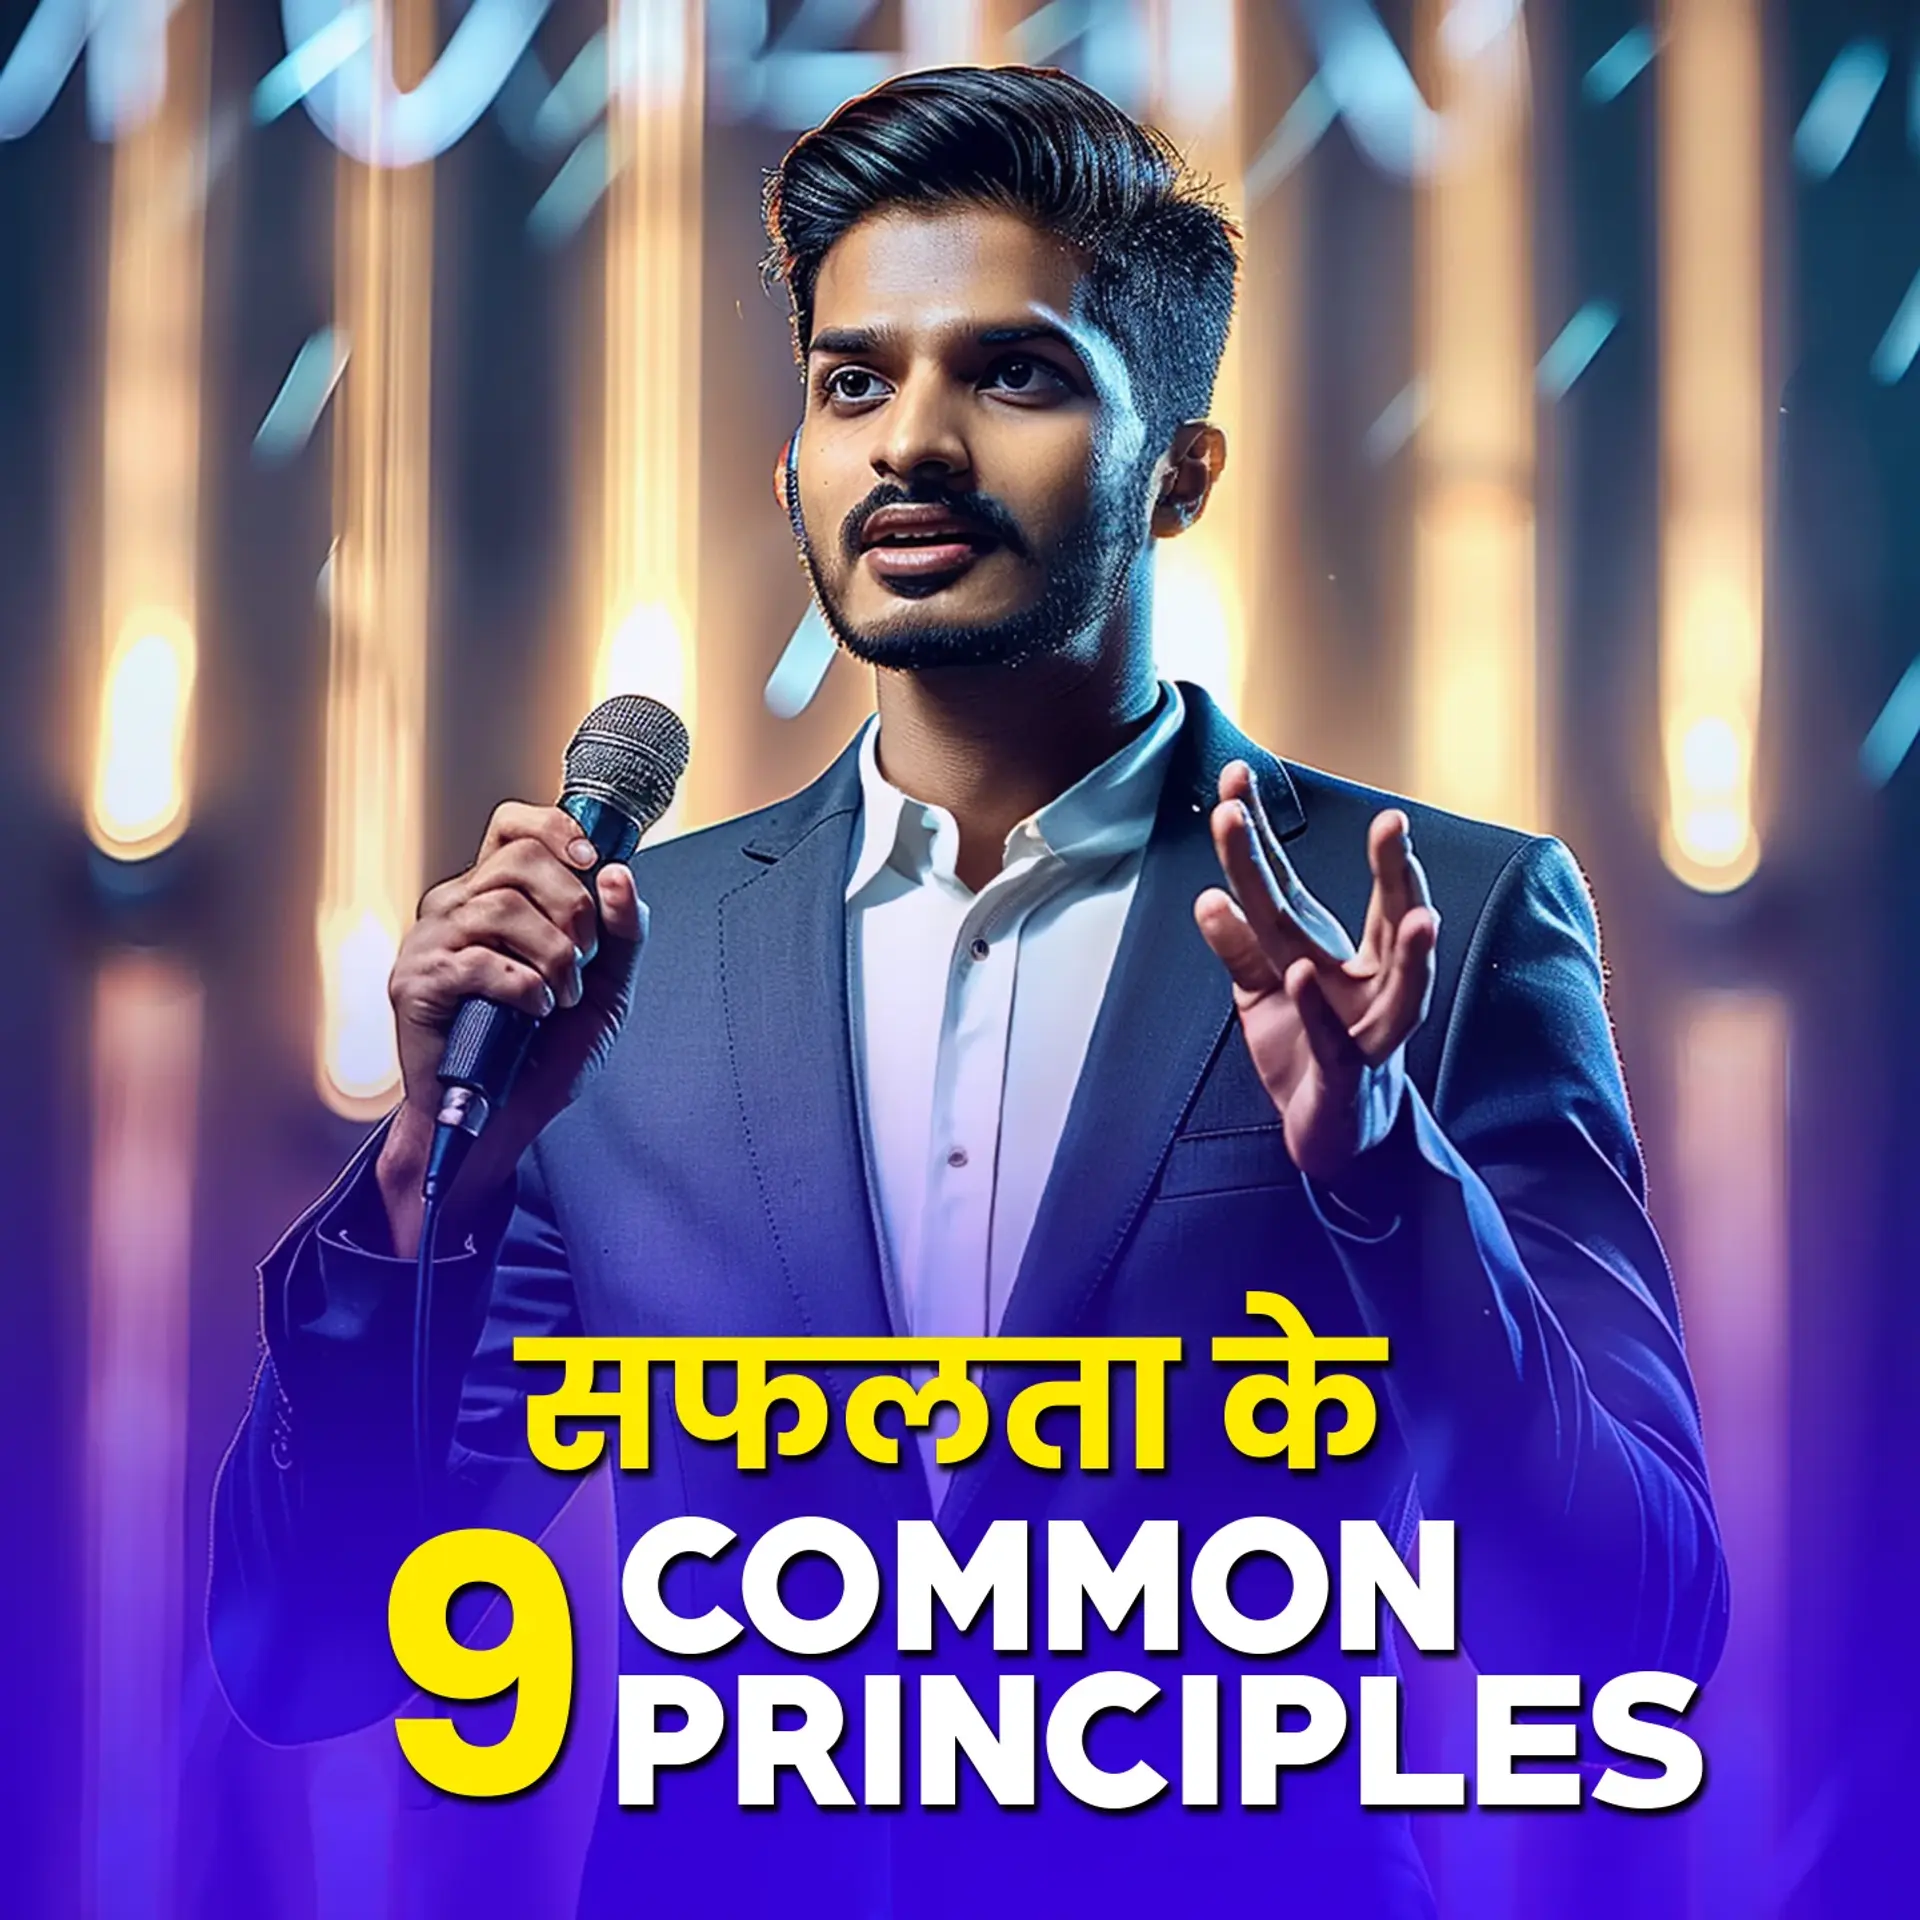 सफलता के 9 Common Principles | 